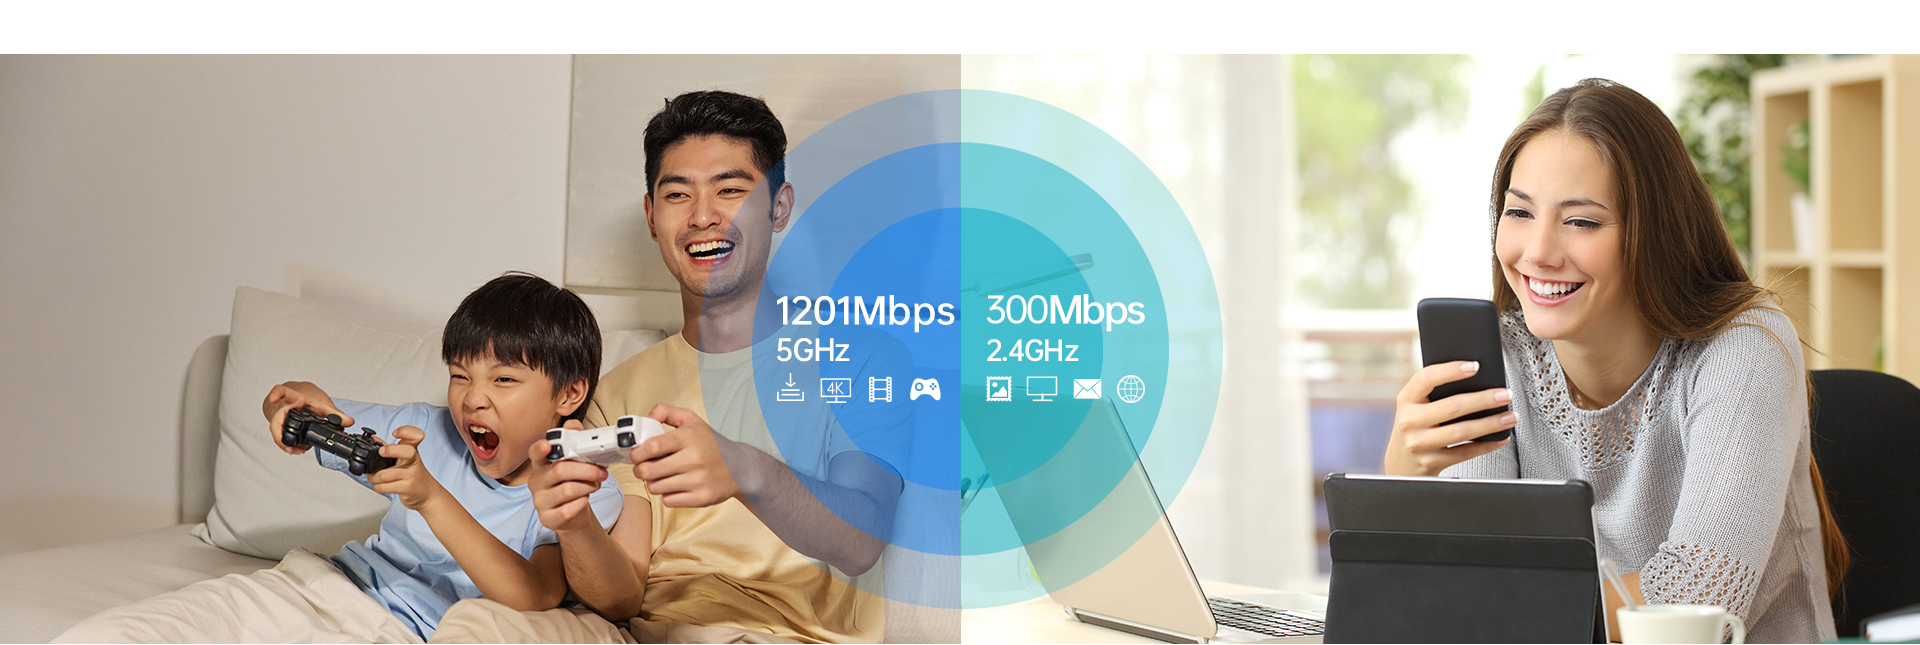 1501Mbps Ultra-Fast Wi-Fi